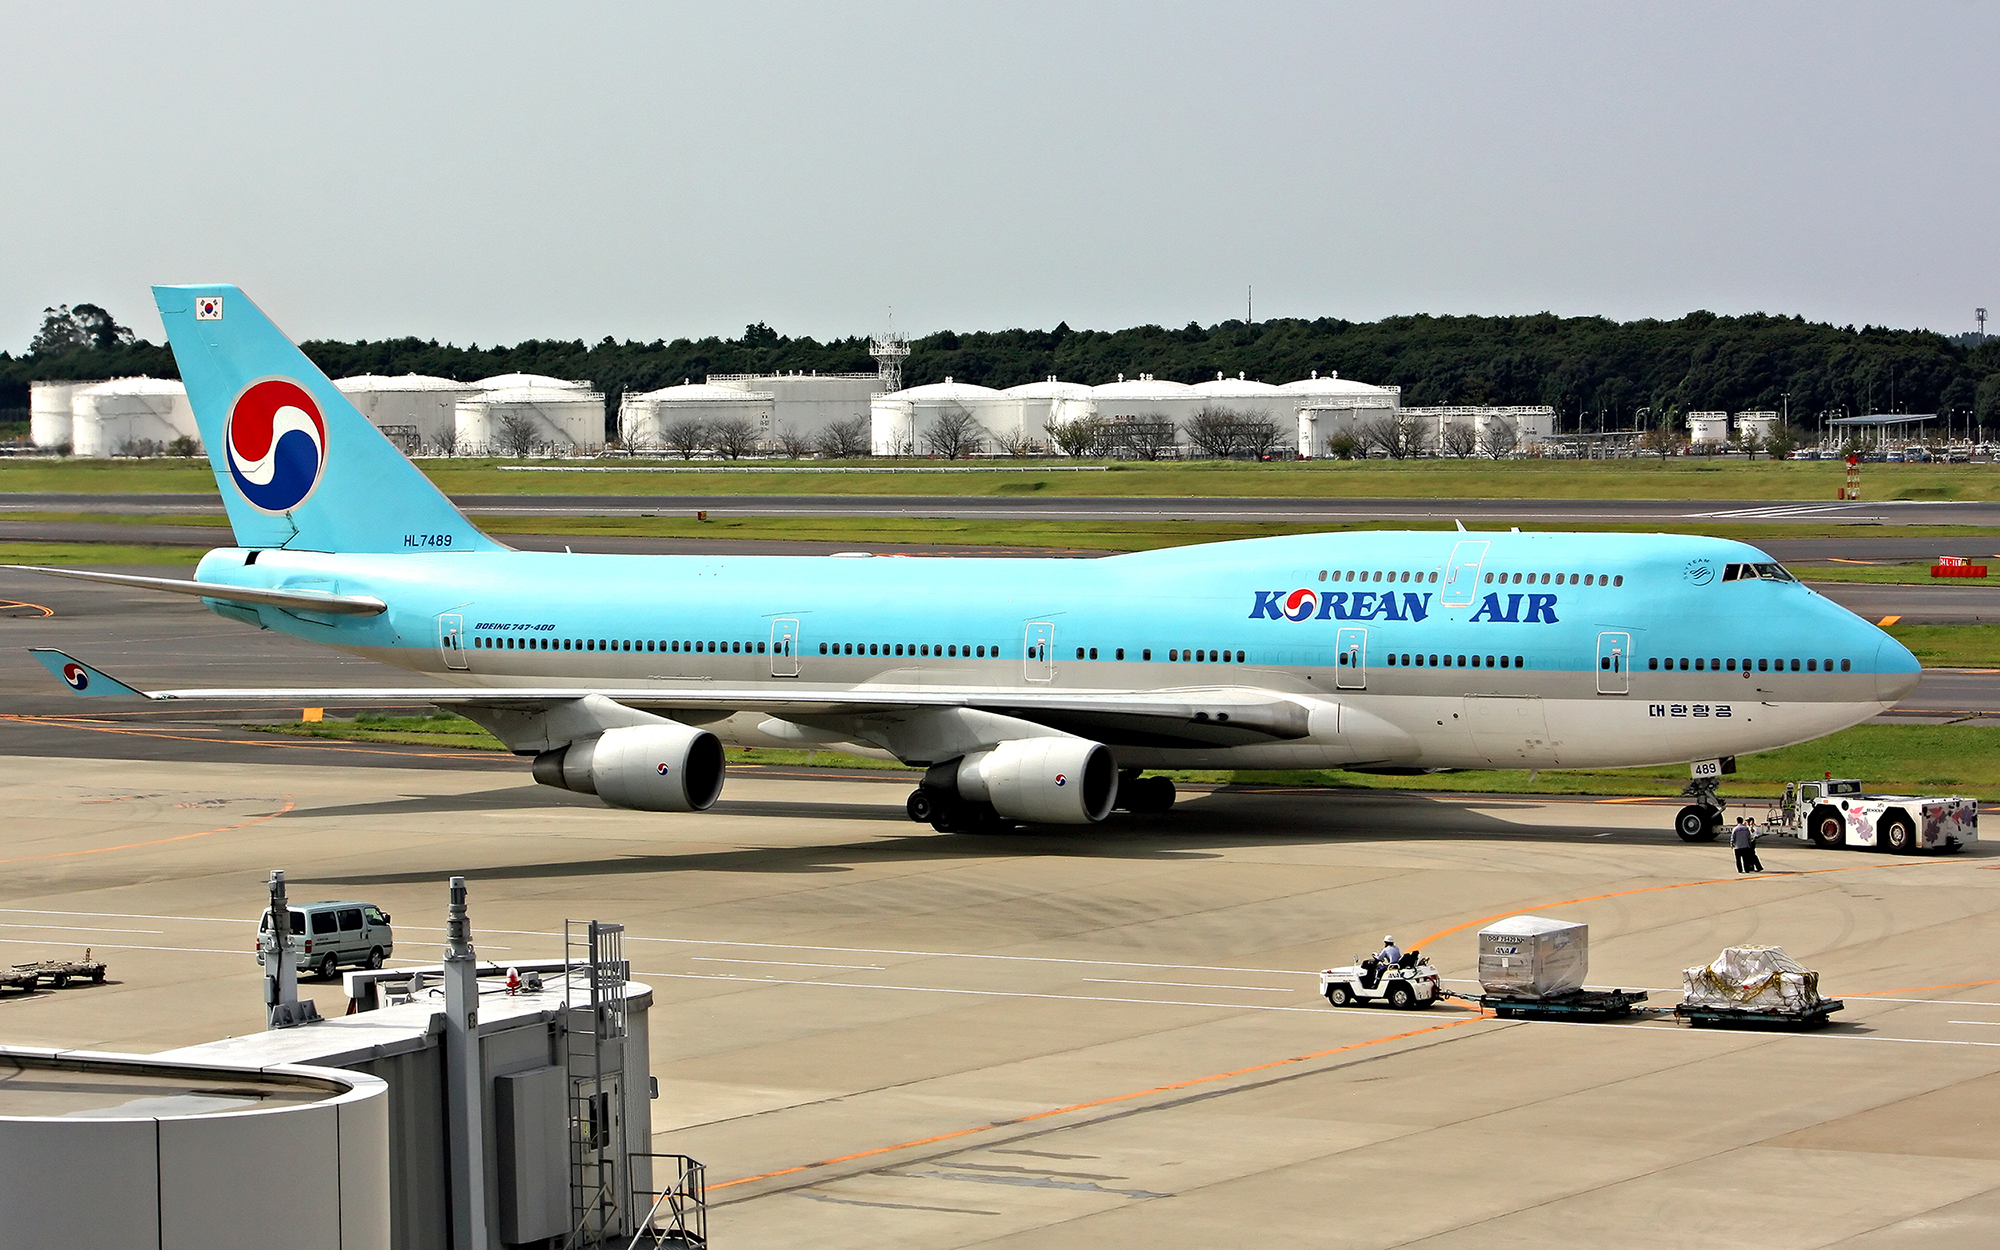 a korean air jumbo jet is on the runway